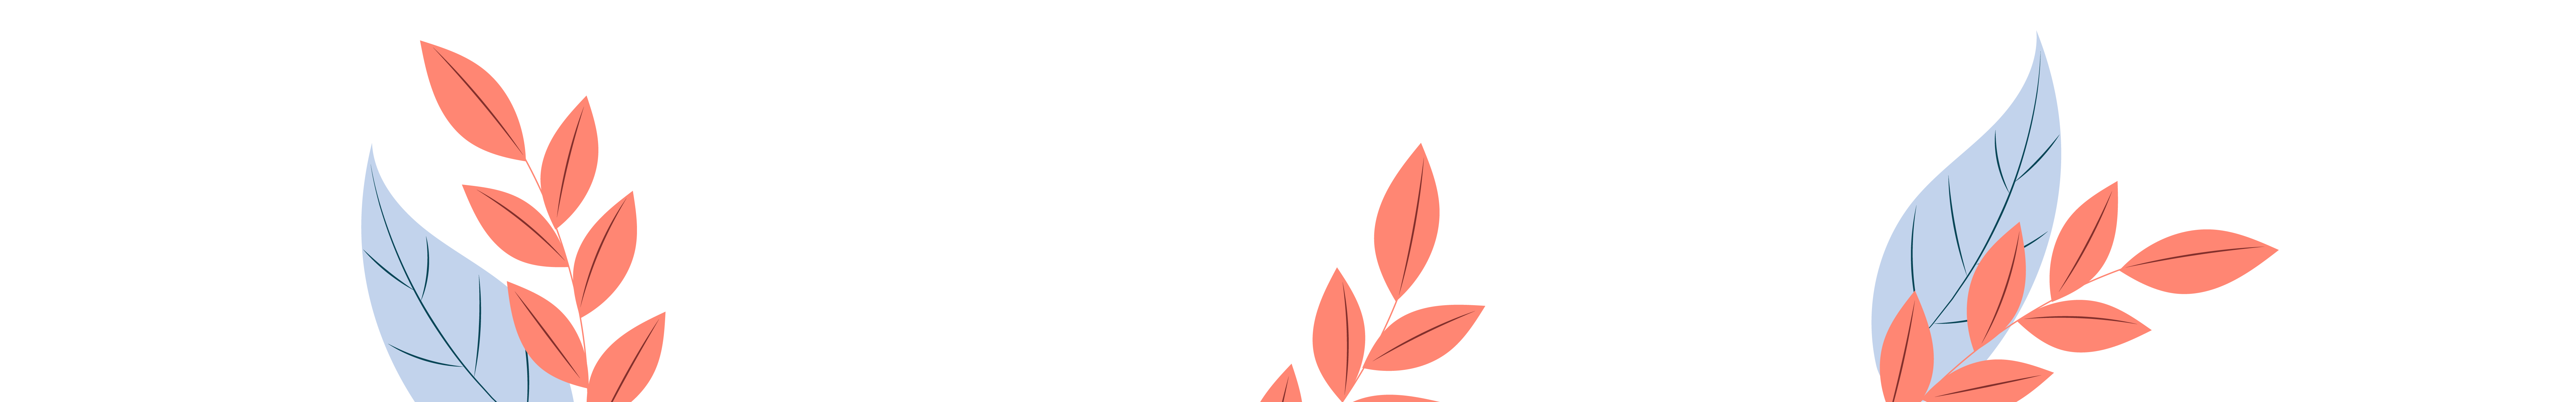 Illustration végétale